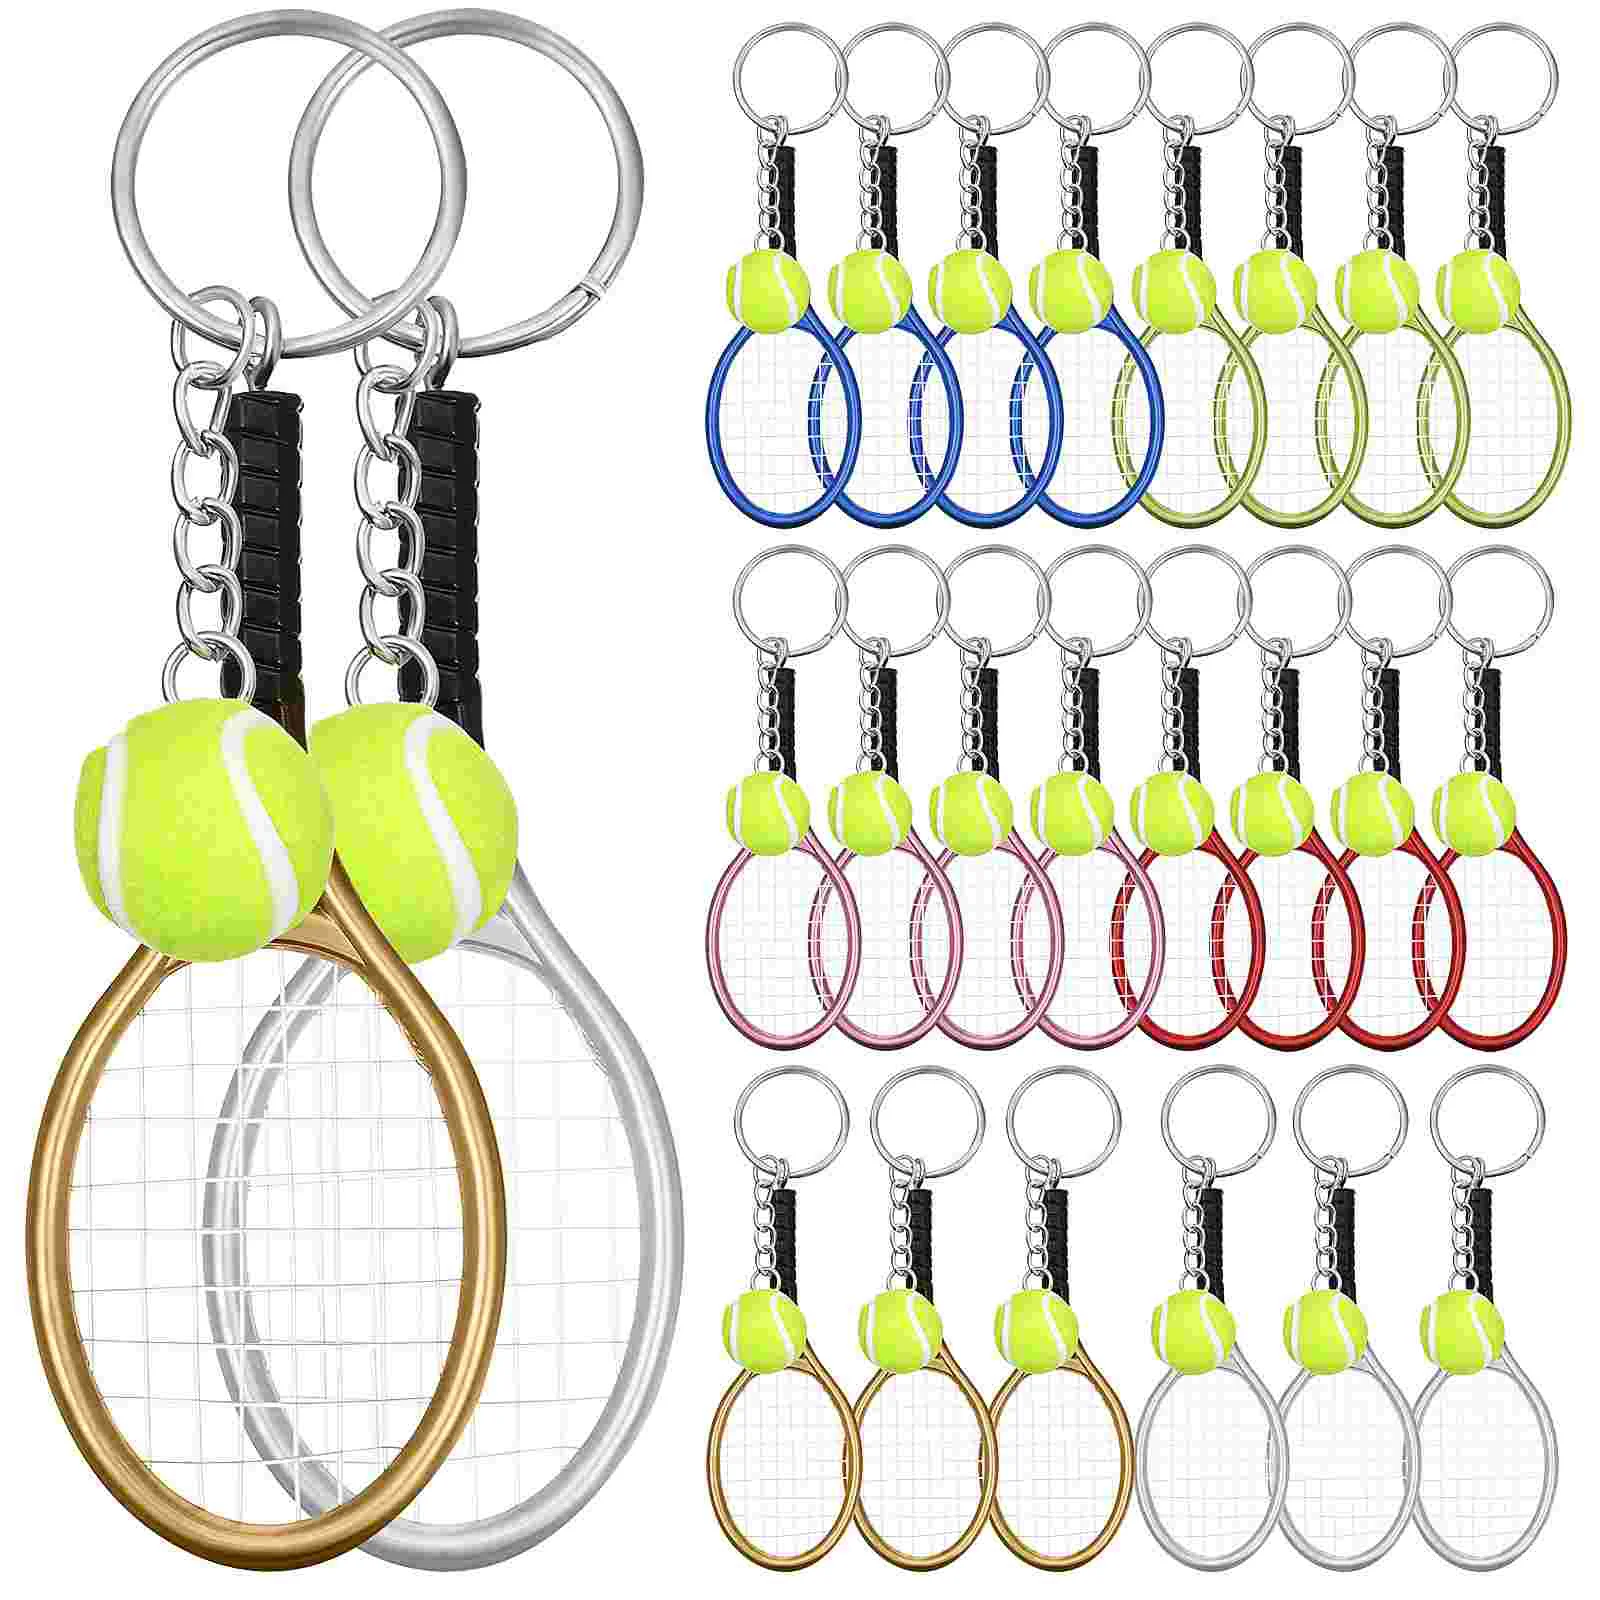 24 Pcs Key Chain Souvenir Gifts Tennis Racket Ball Ring Fob Toy Holder Flocking Decorative Keychain Mini Pendant